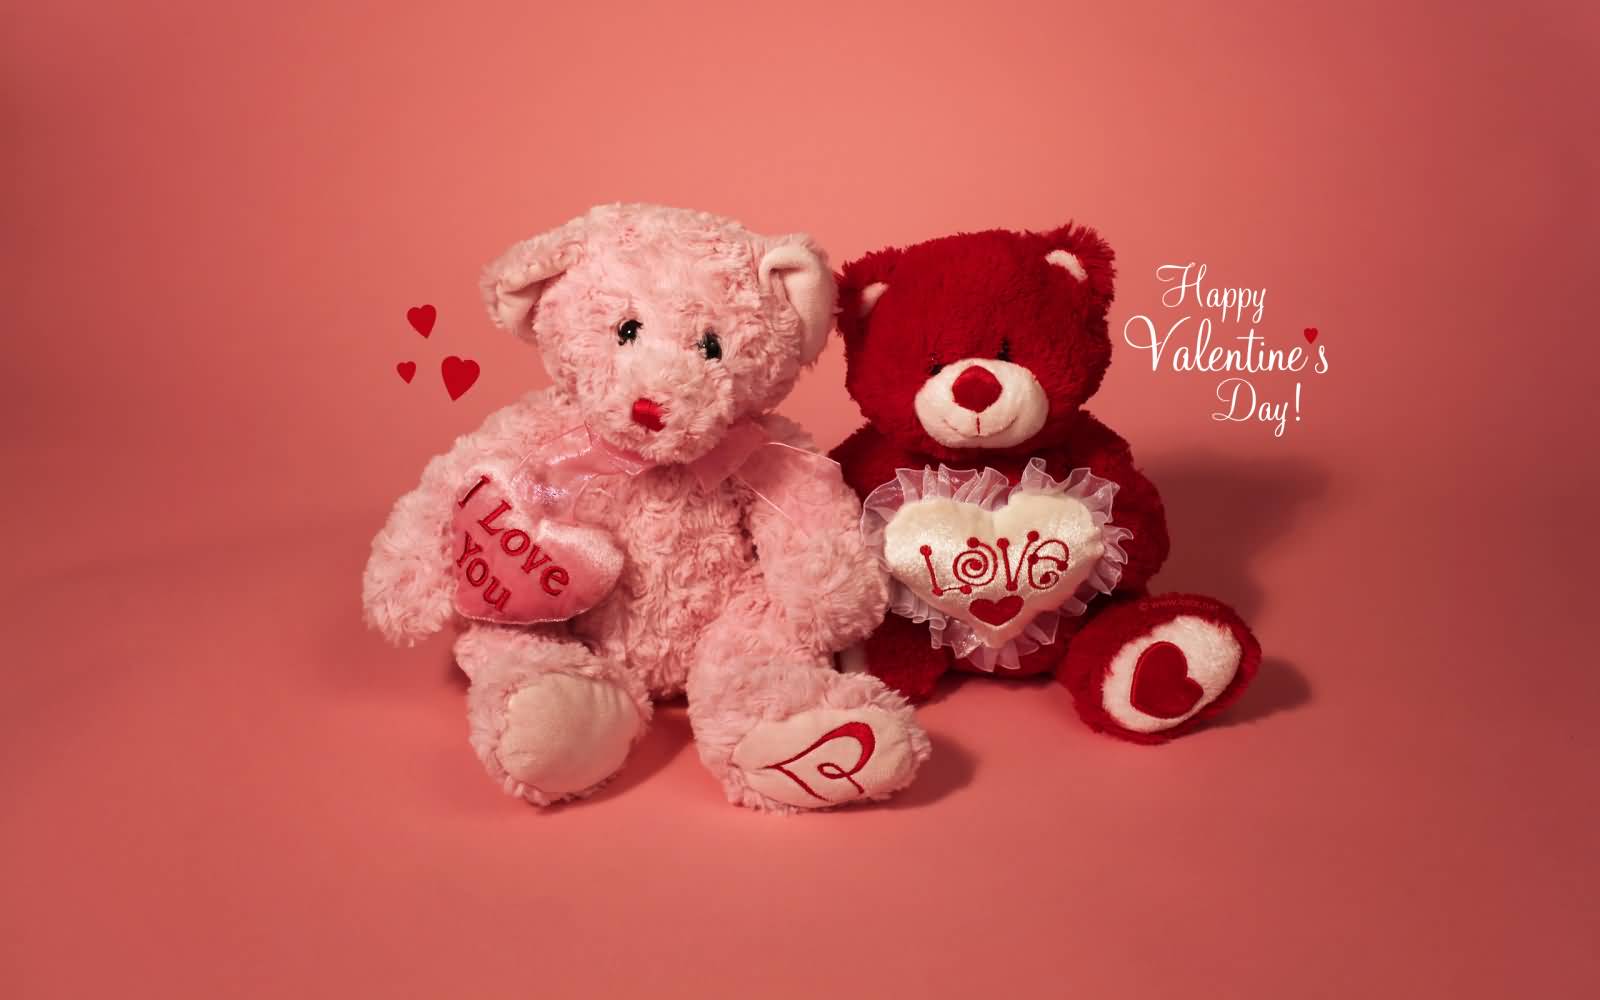 Happy Valentine’s Day Two Teddy Bears HD Wallpaper